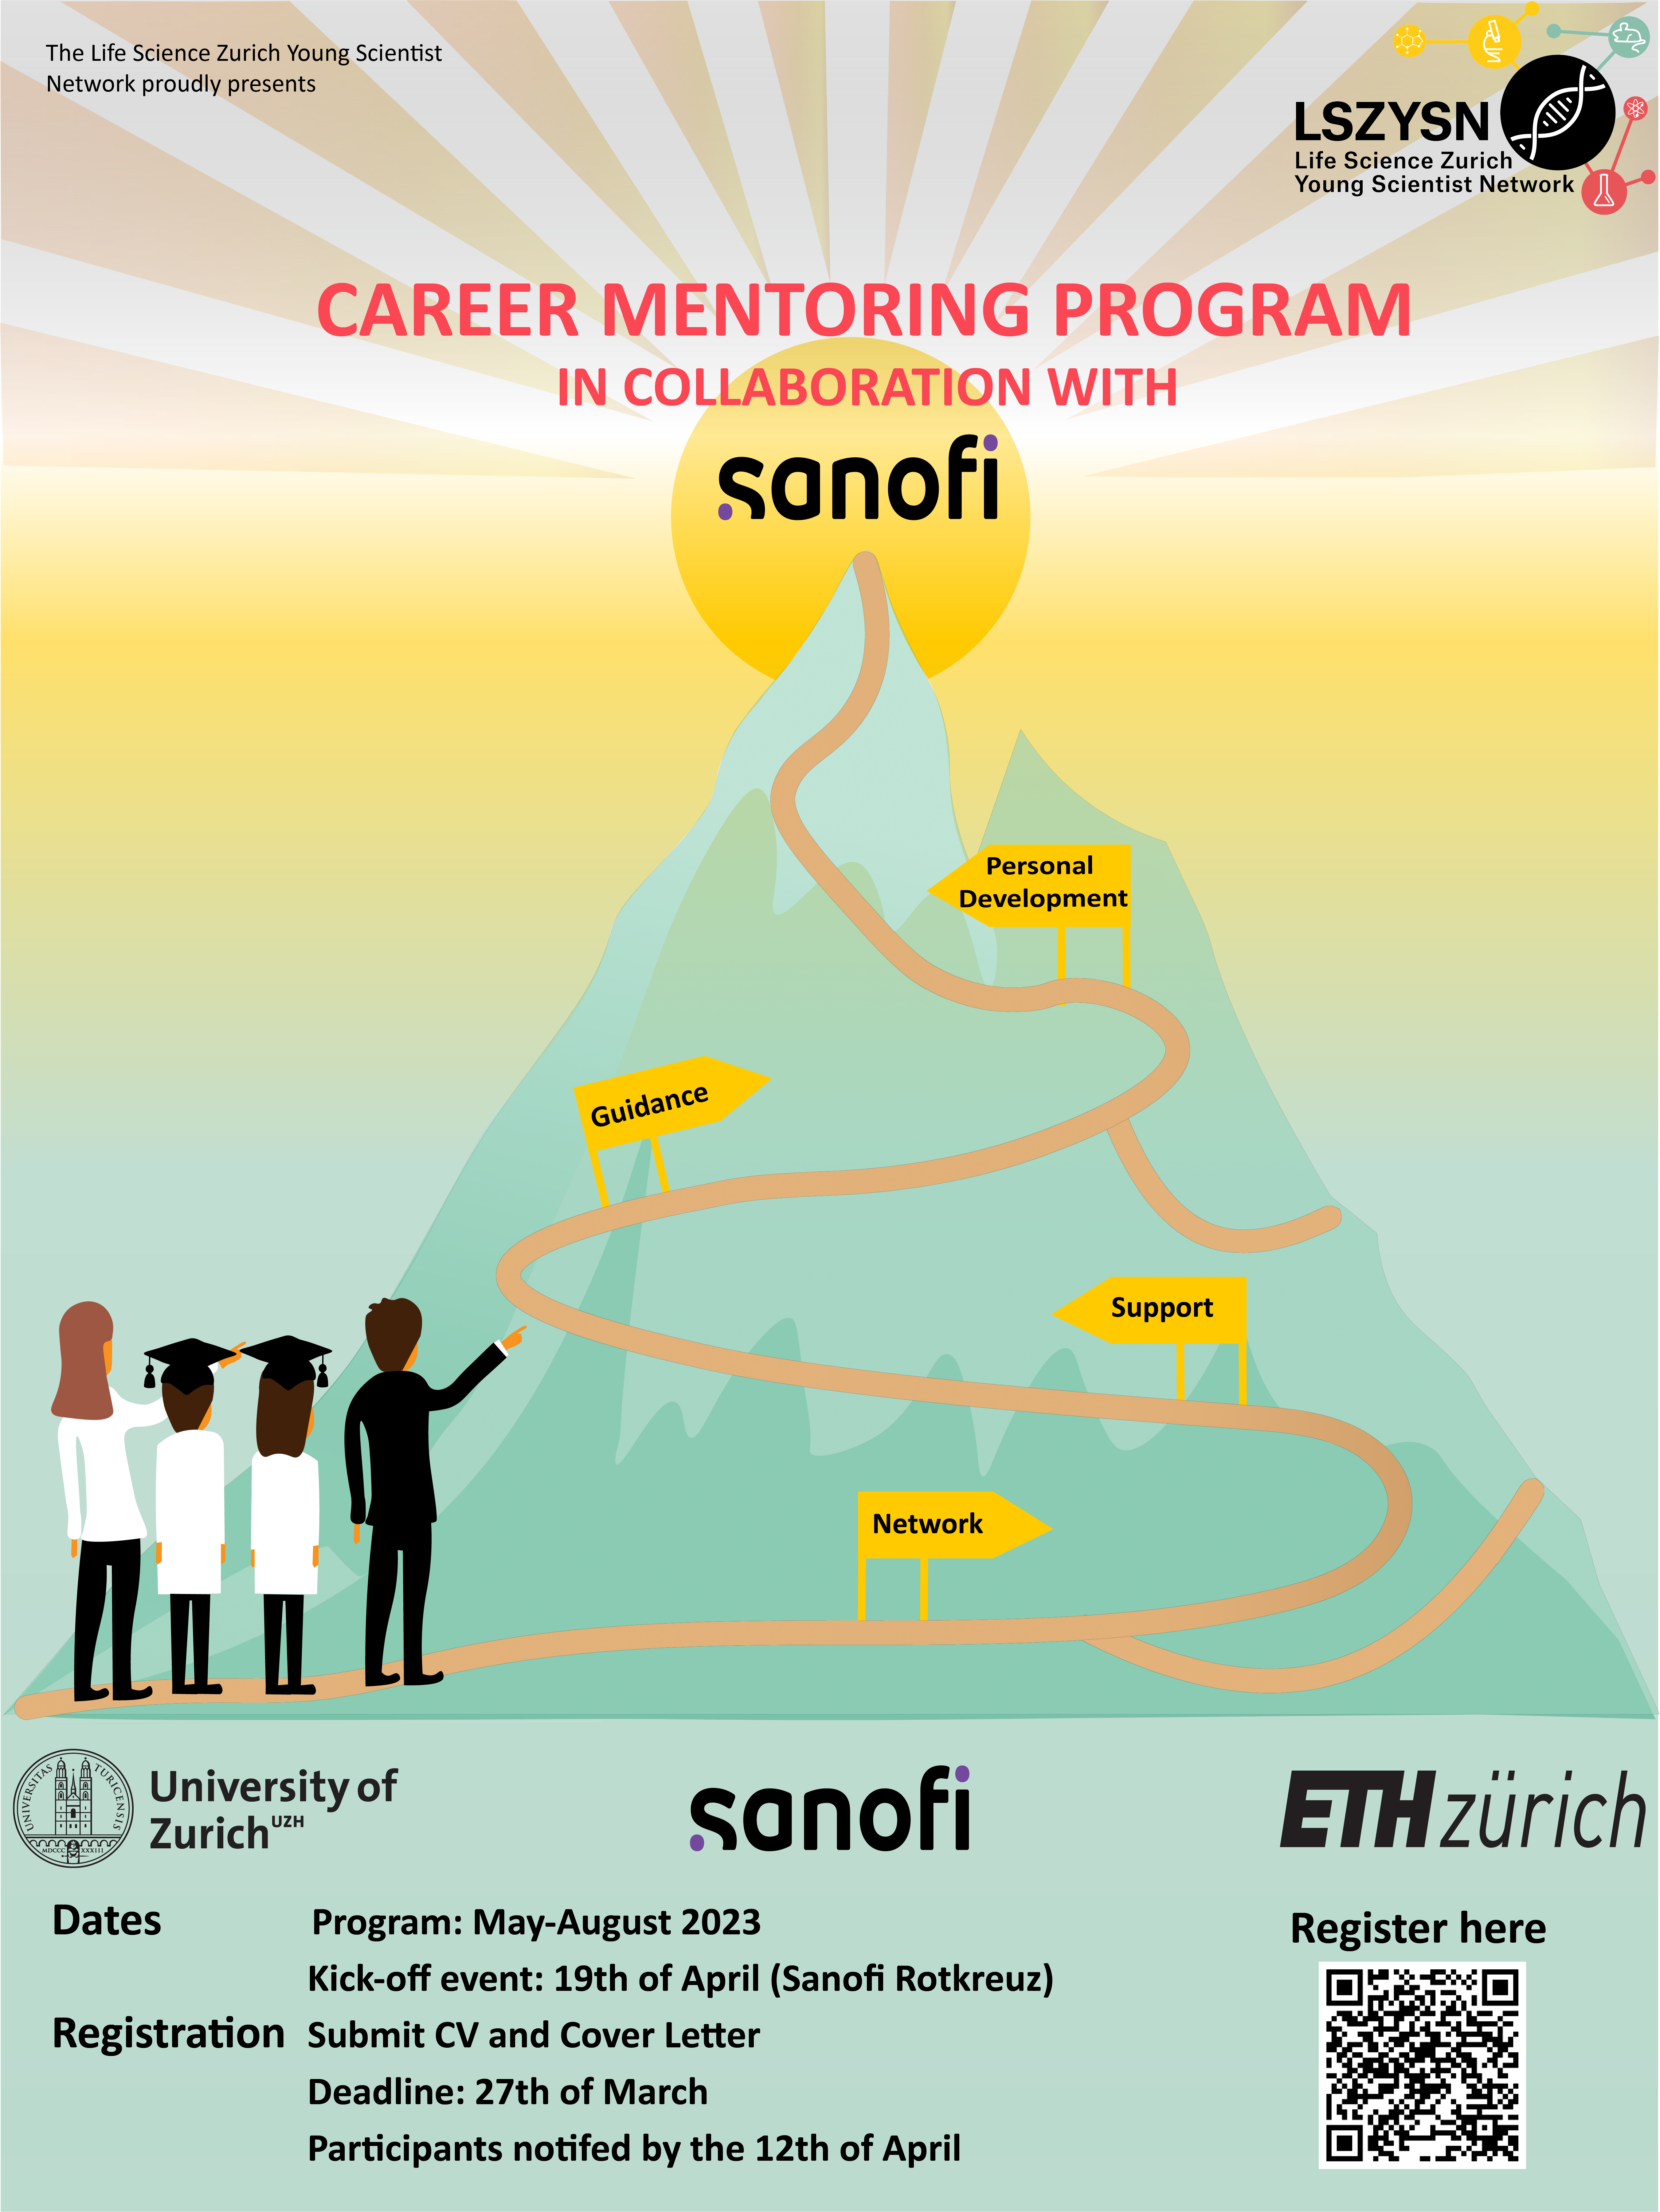  Career Mentoring Program: Sanofi